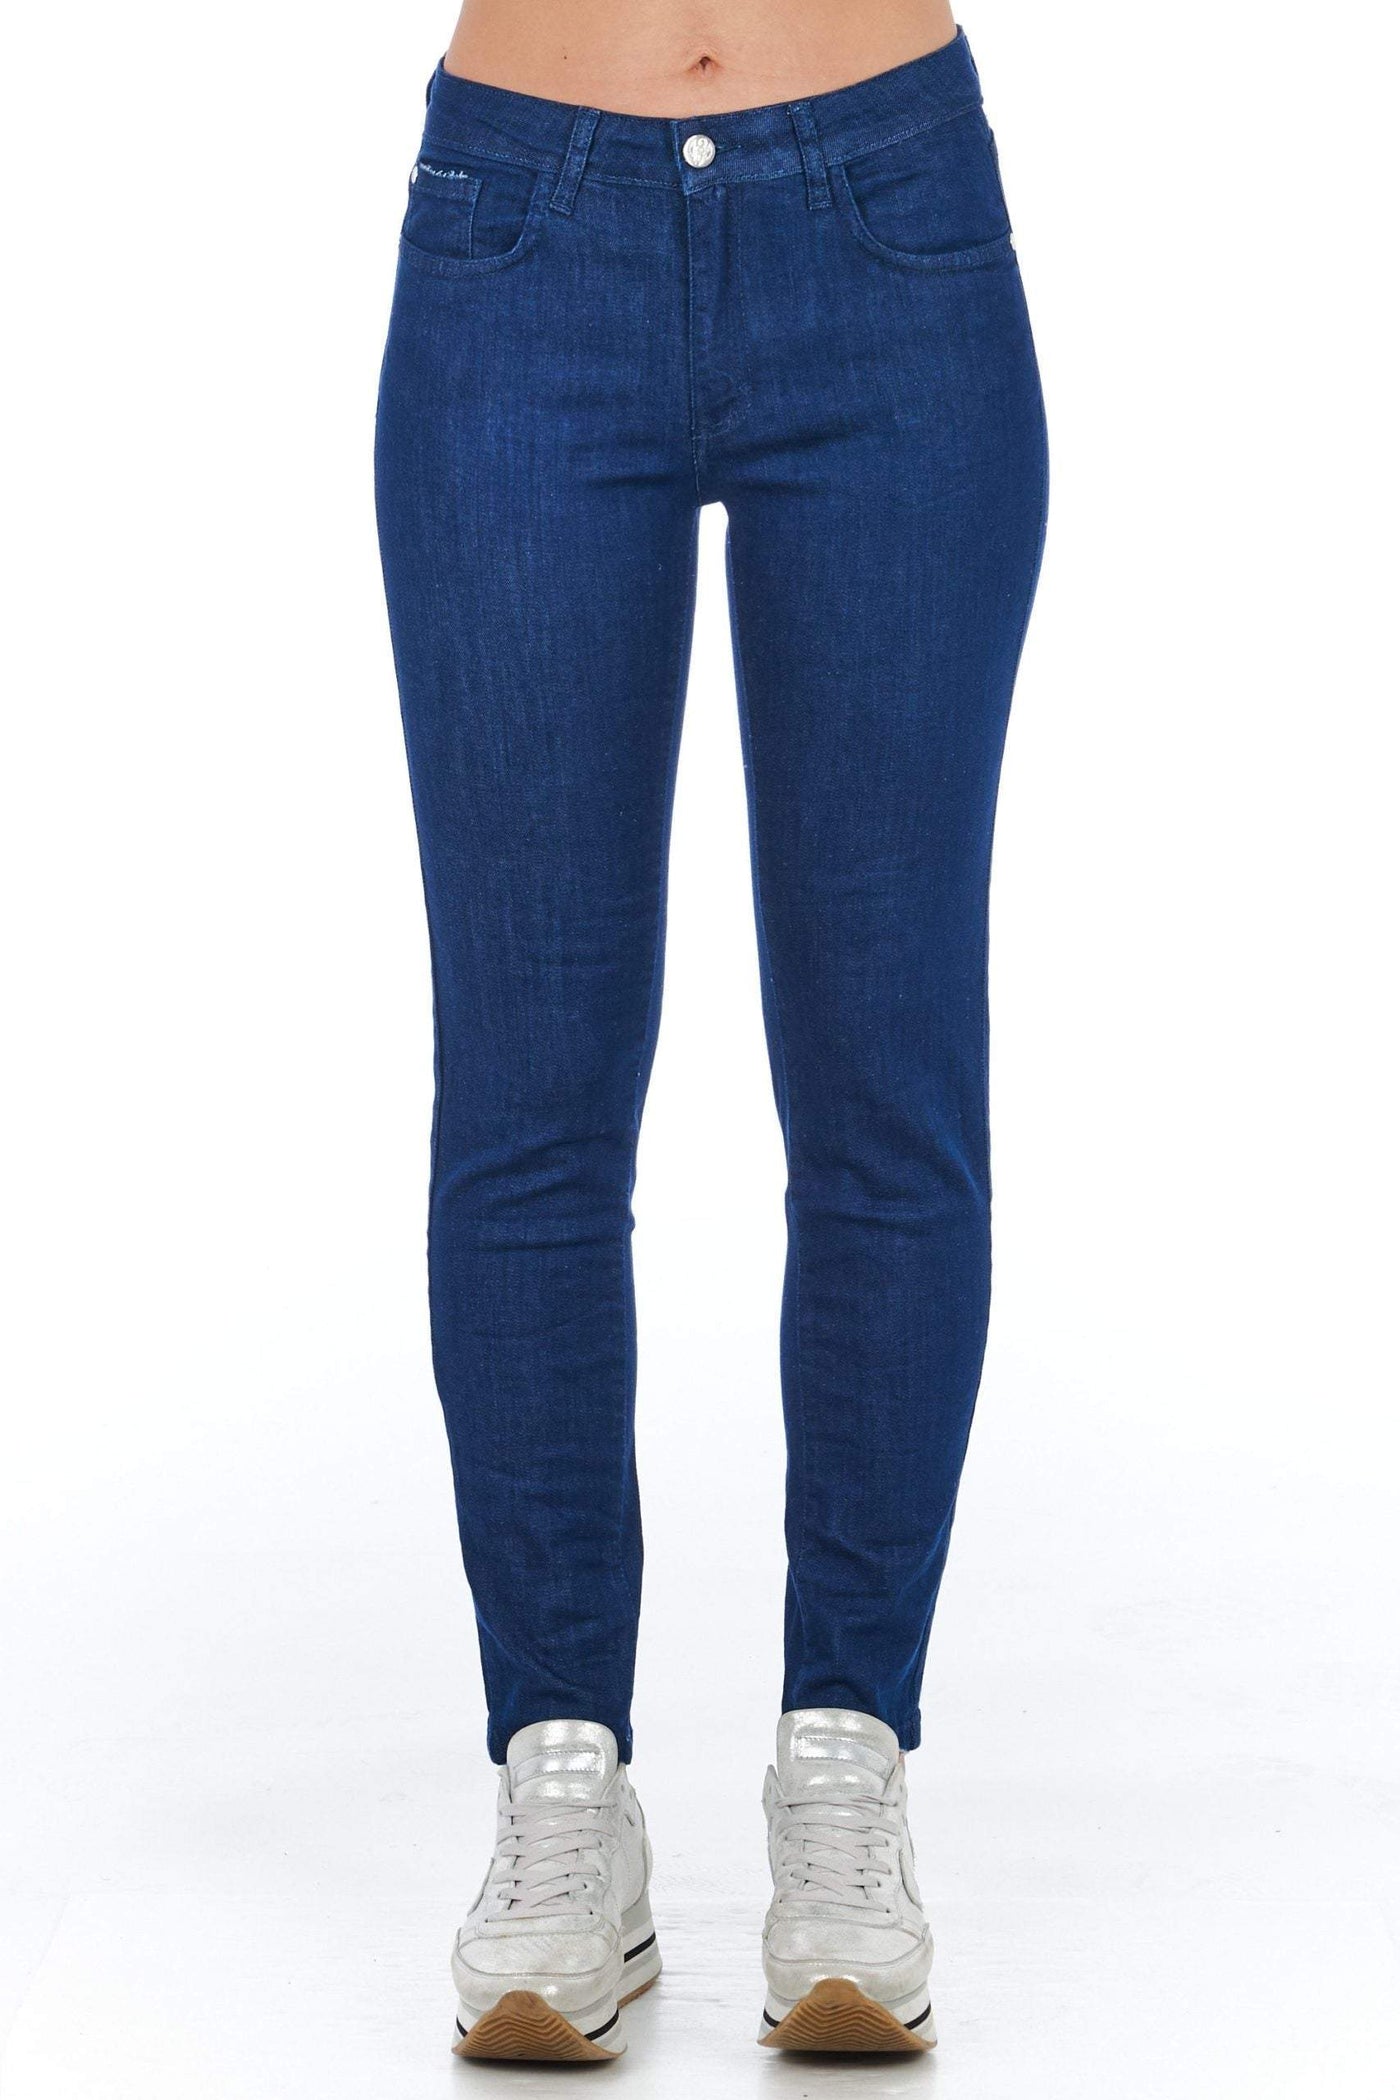 Frankie Morello Blue Cotton Jeans & Pant Blue, feed-1, Frankie Morello, Jeans & Pants - Women - Clothing, W27 | IT41 at SEYMAYKA